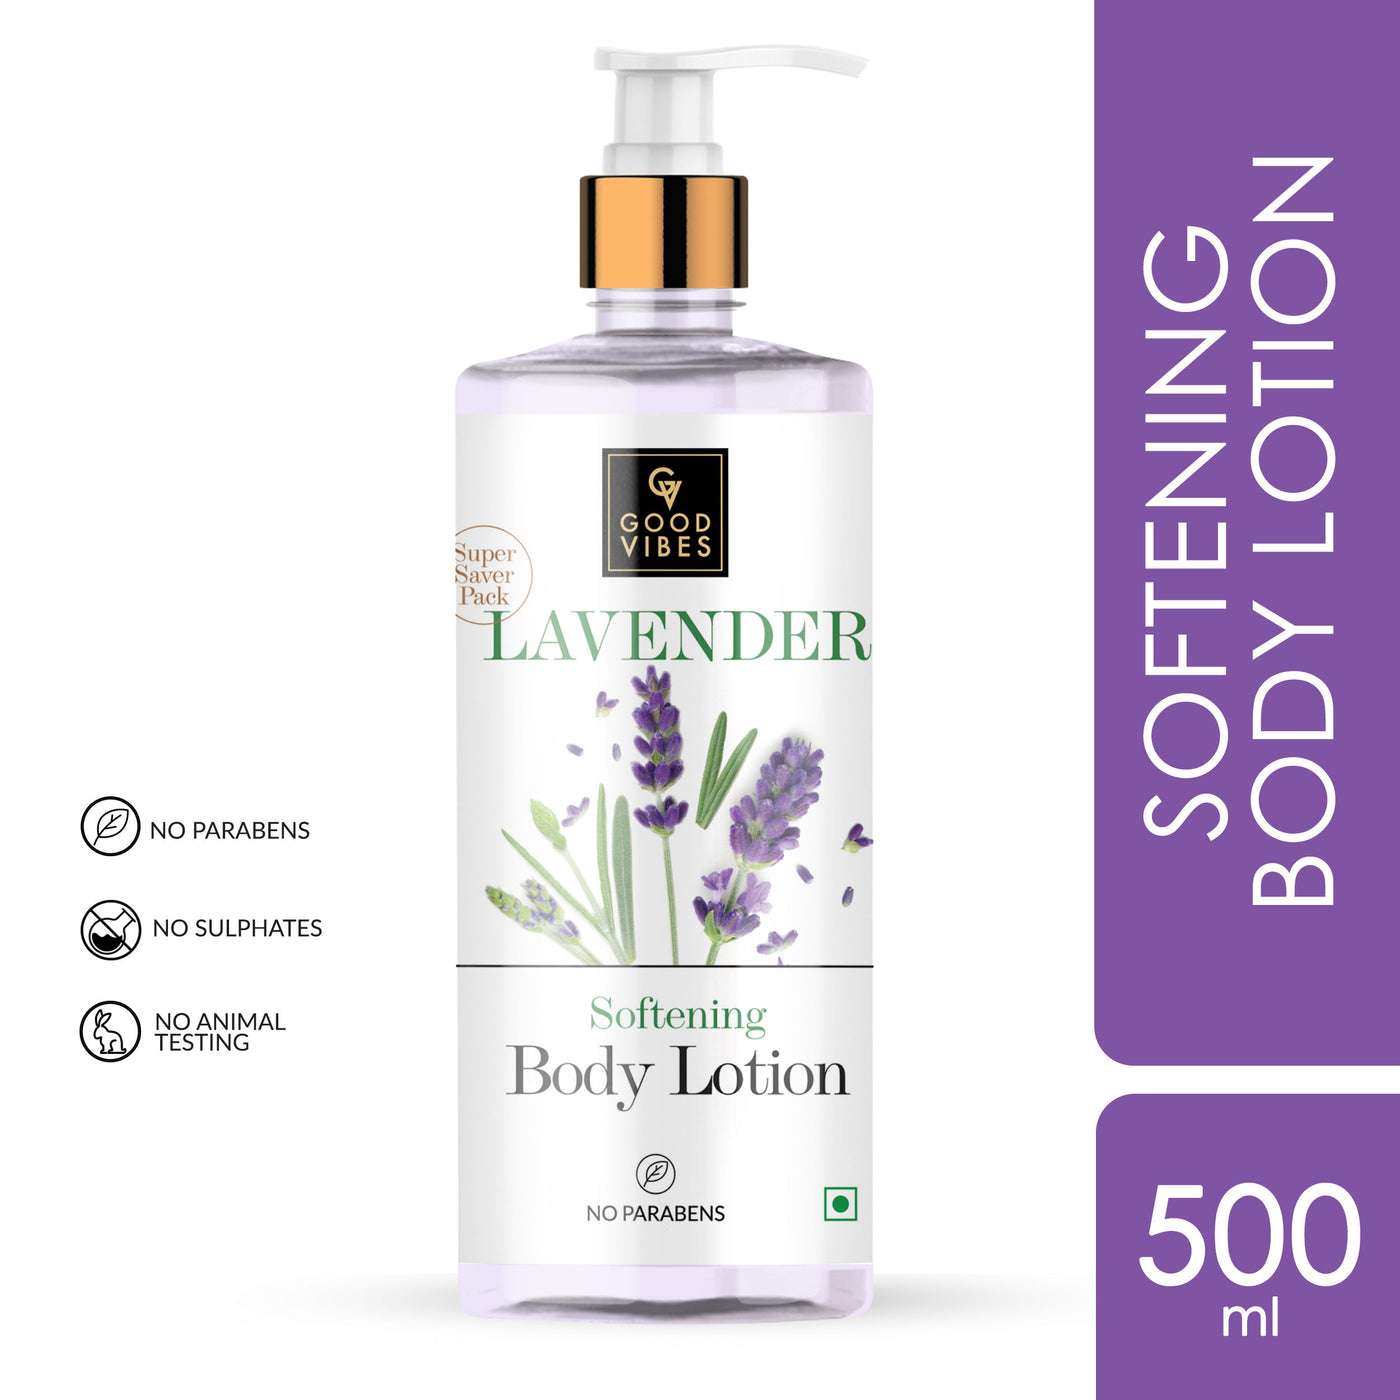 good-vibes-lavender-softening-body-lotion-400ml-100-ml-free-1-16-91-2